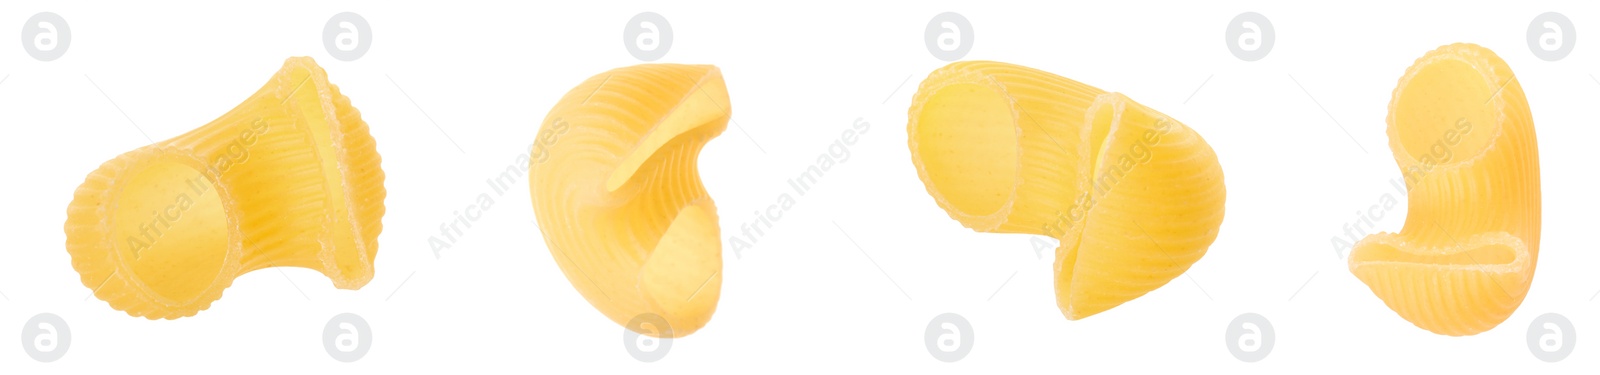 Image of Raw horns pasta isolated on white, set